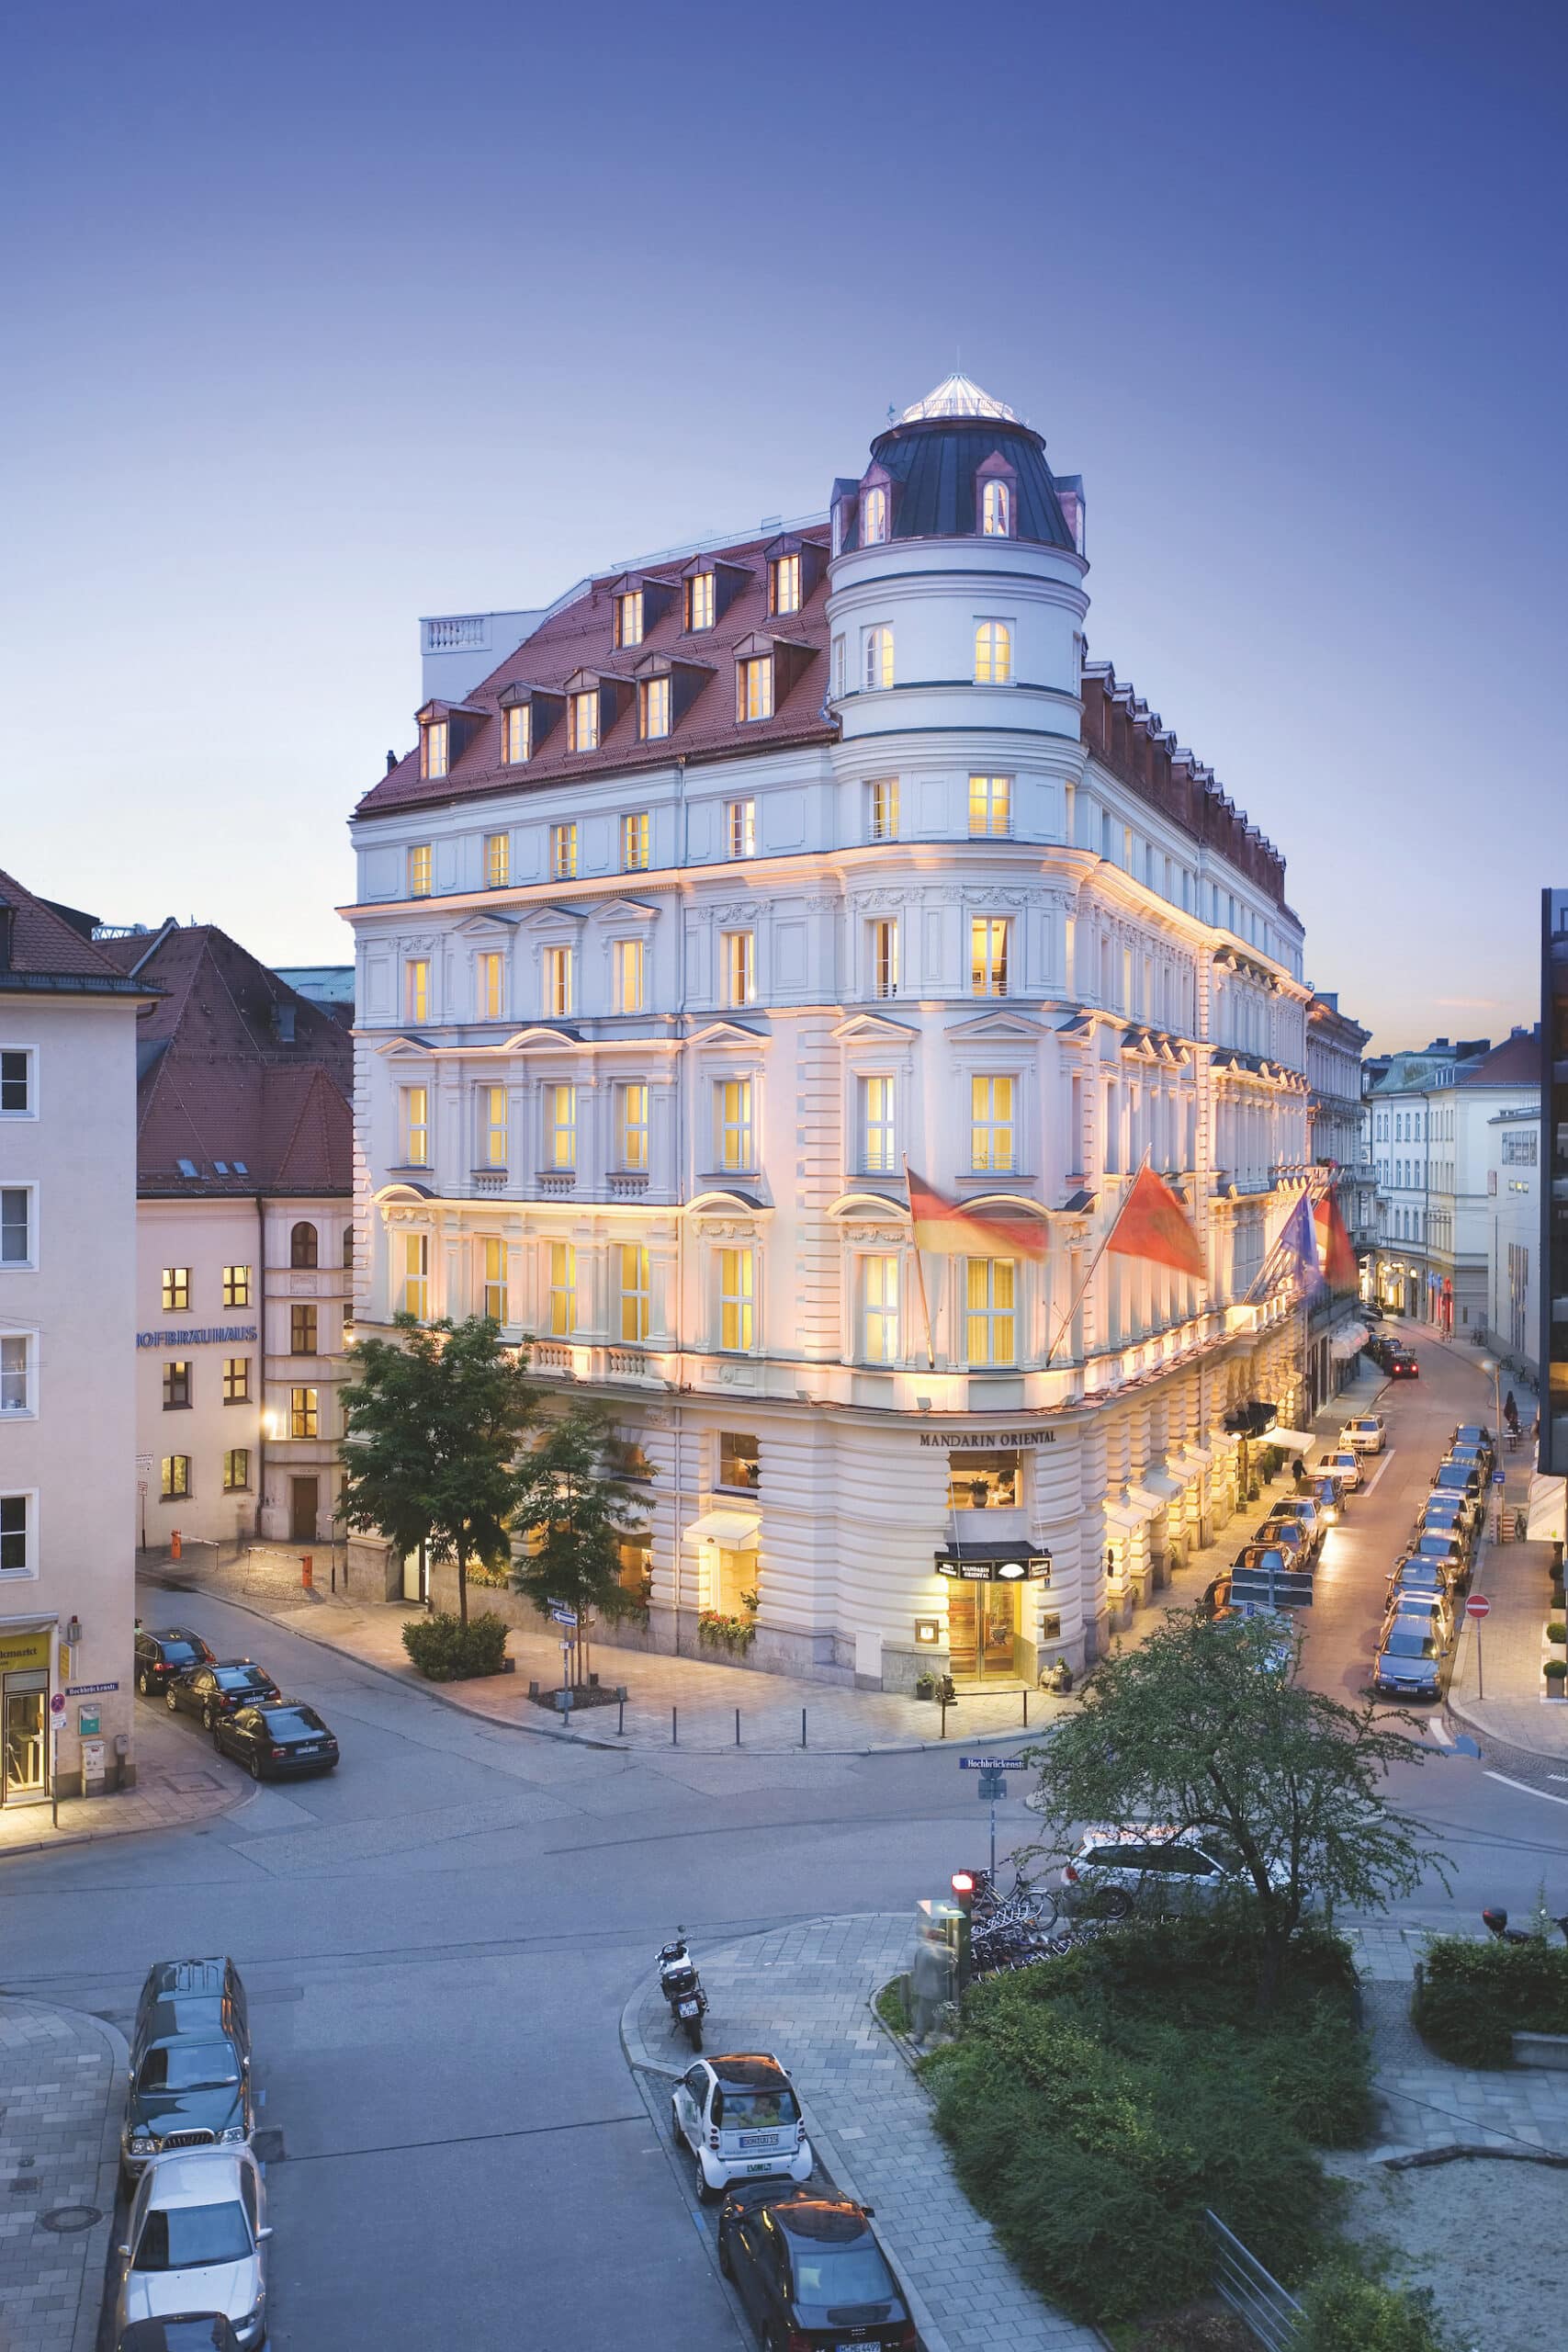 One of the best hotels in Germany is the Mandarin Oriental in Munich